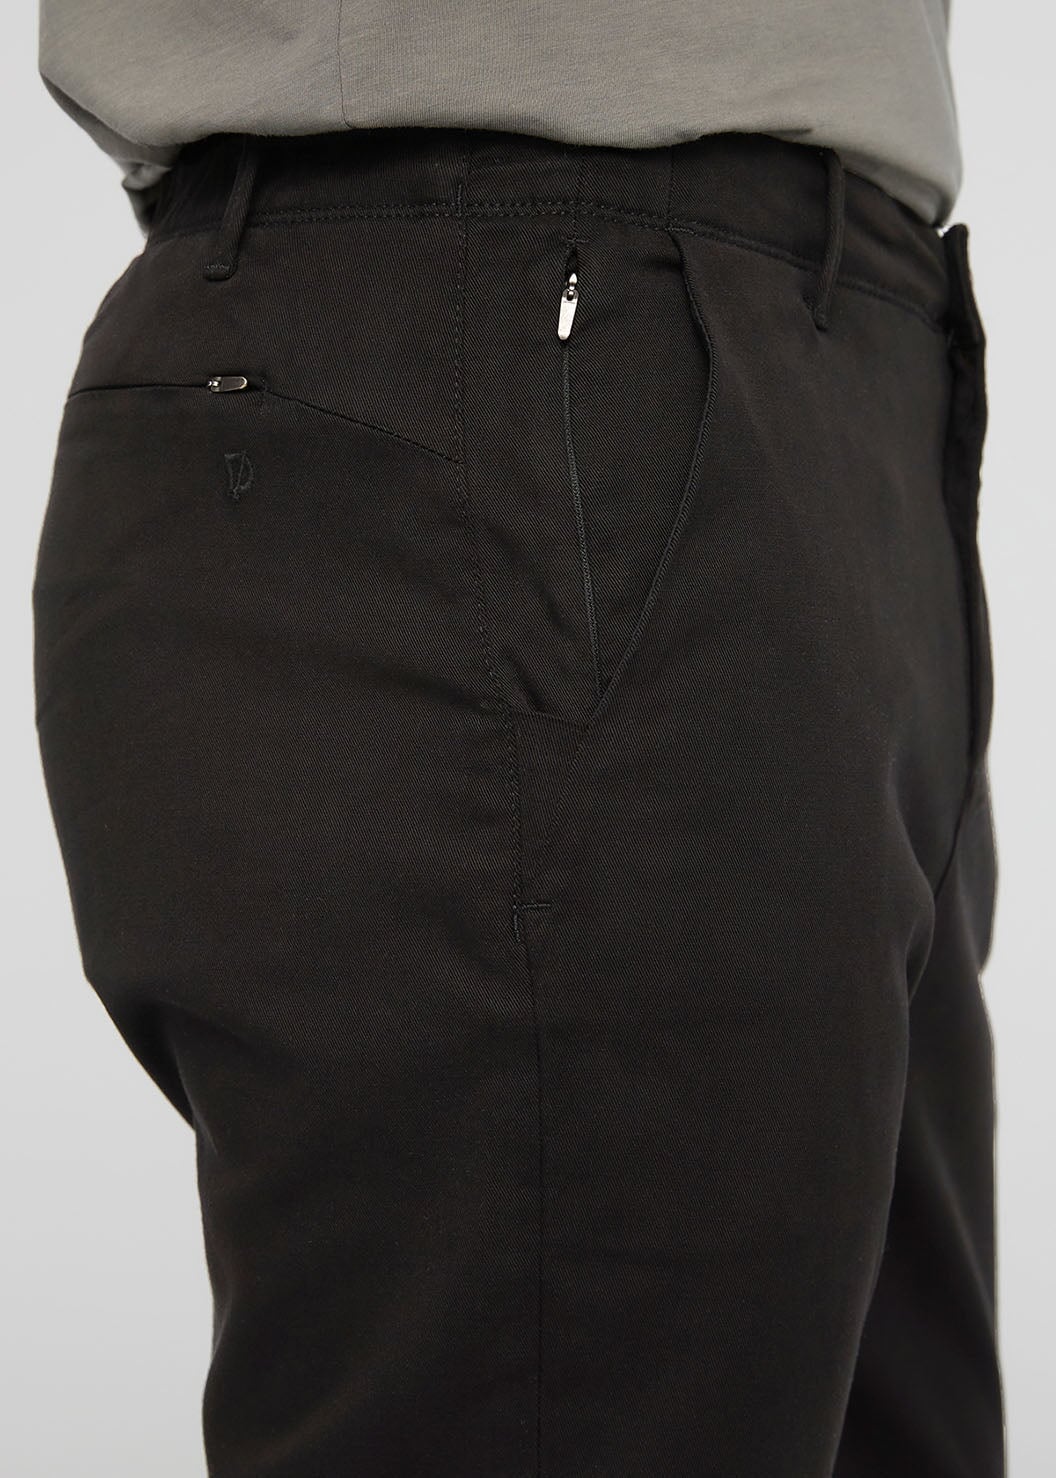 mens stretch black chino pants side zip pocket